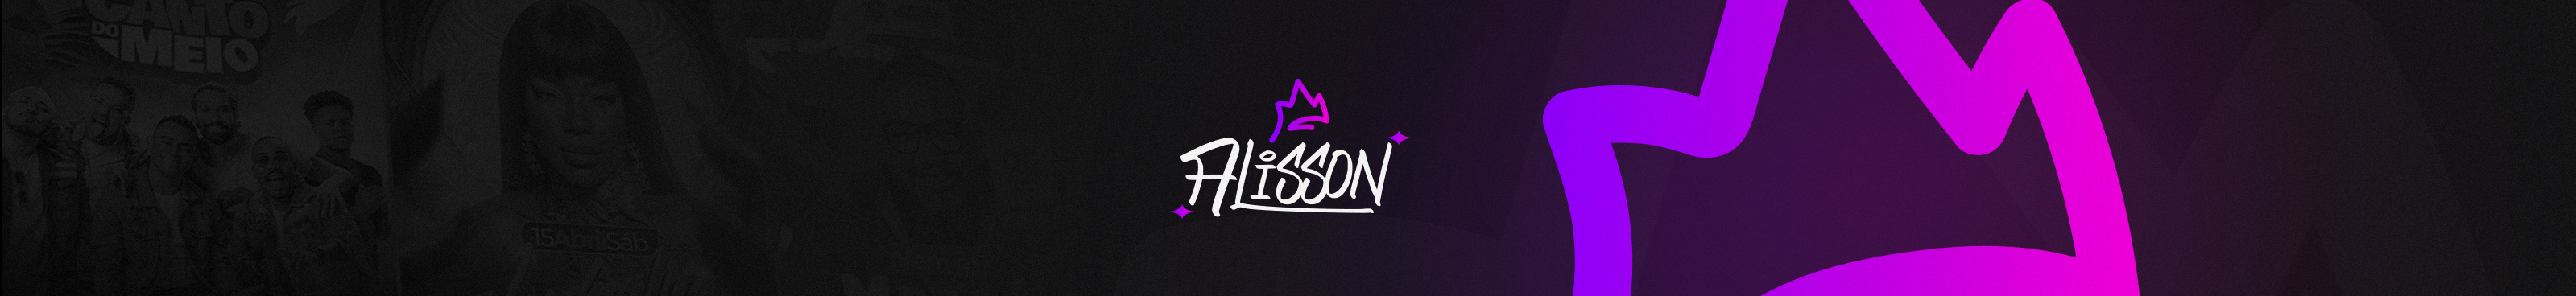 Alisson Guilherme's profile banner